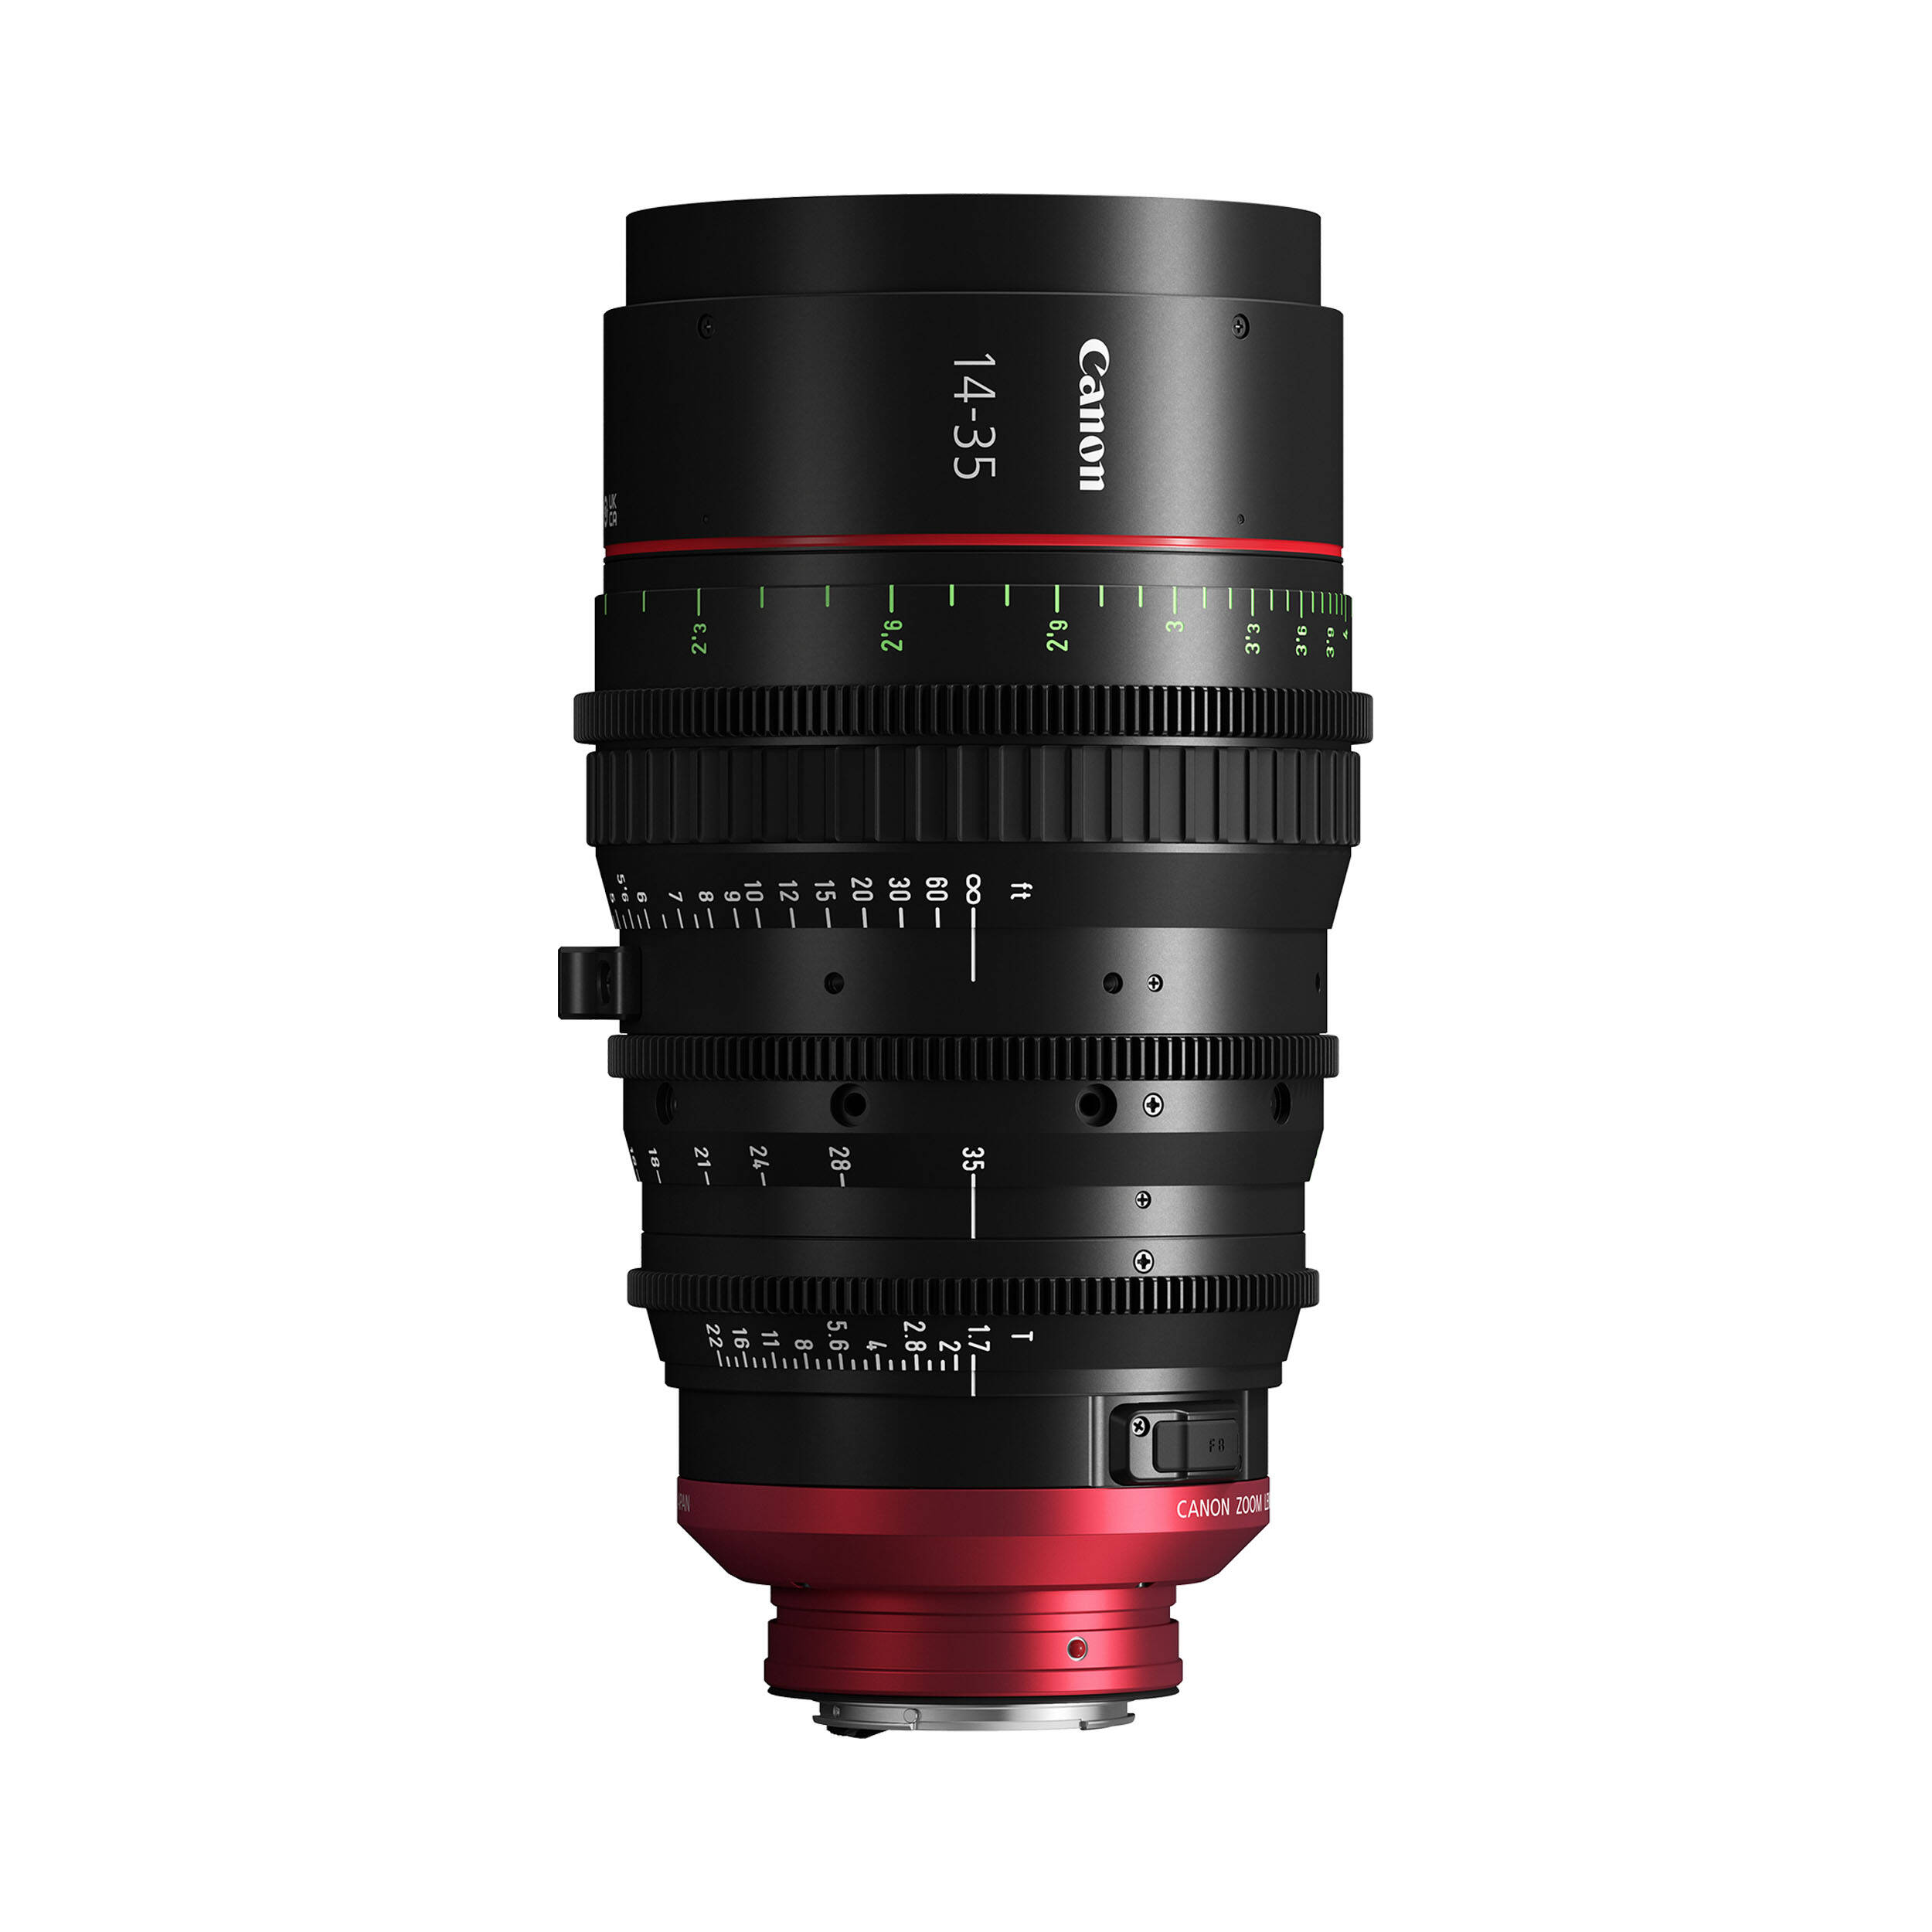 Canon CN-E Flex Zoom 14-35mm T1.7 Super35 Cinema EOS Lens (EF Mount)